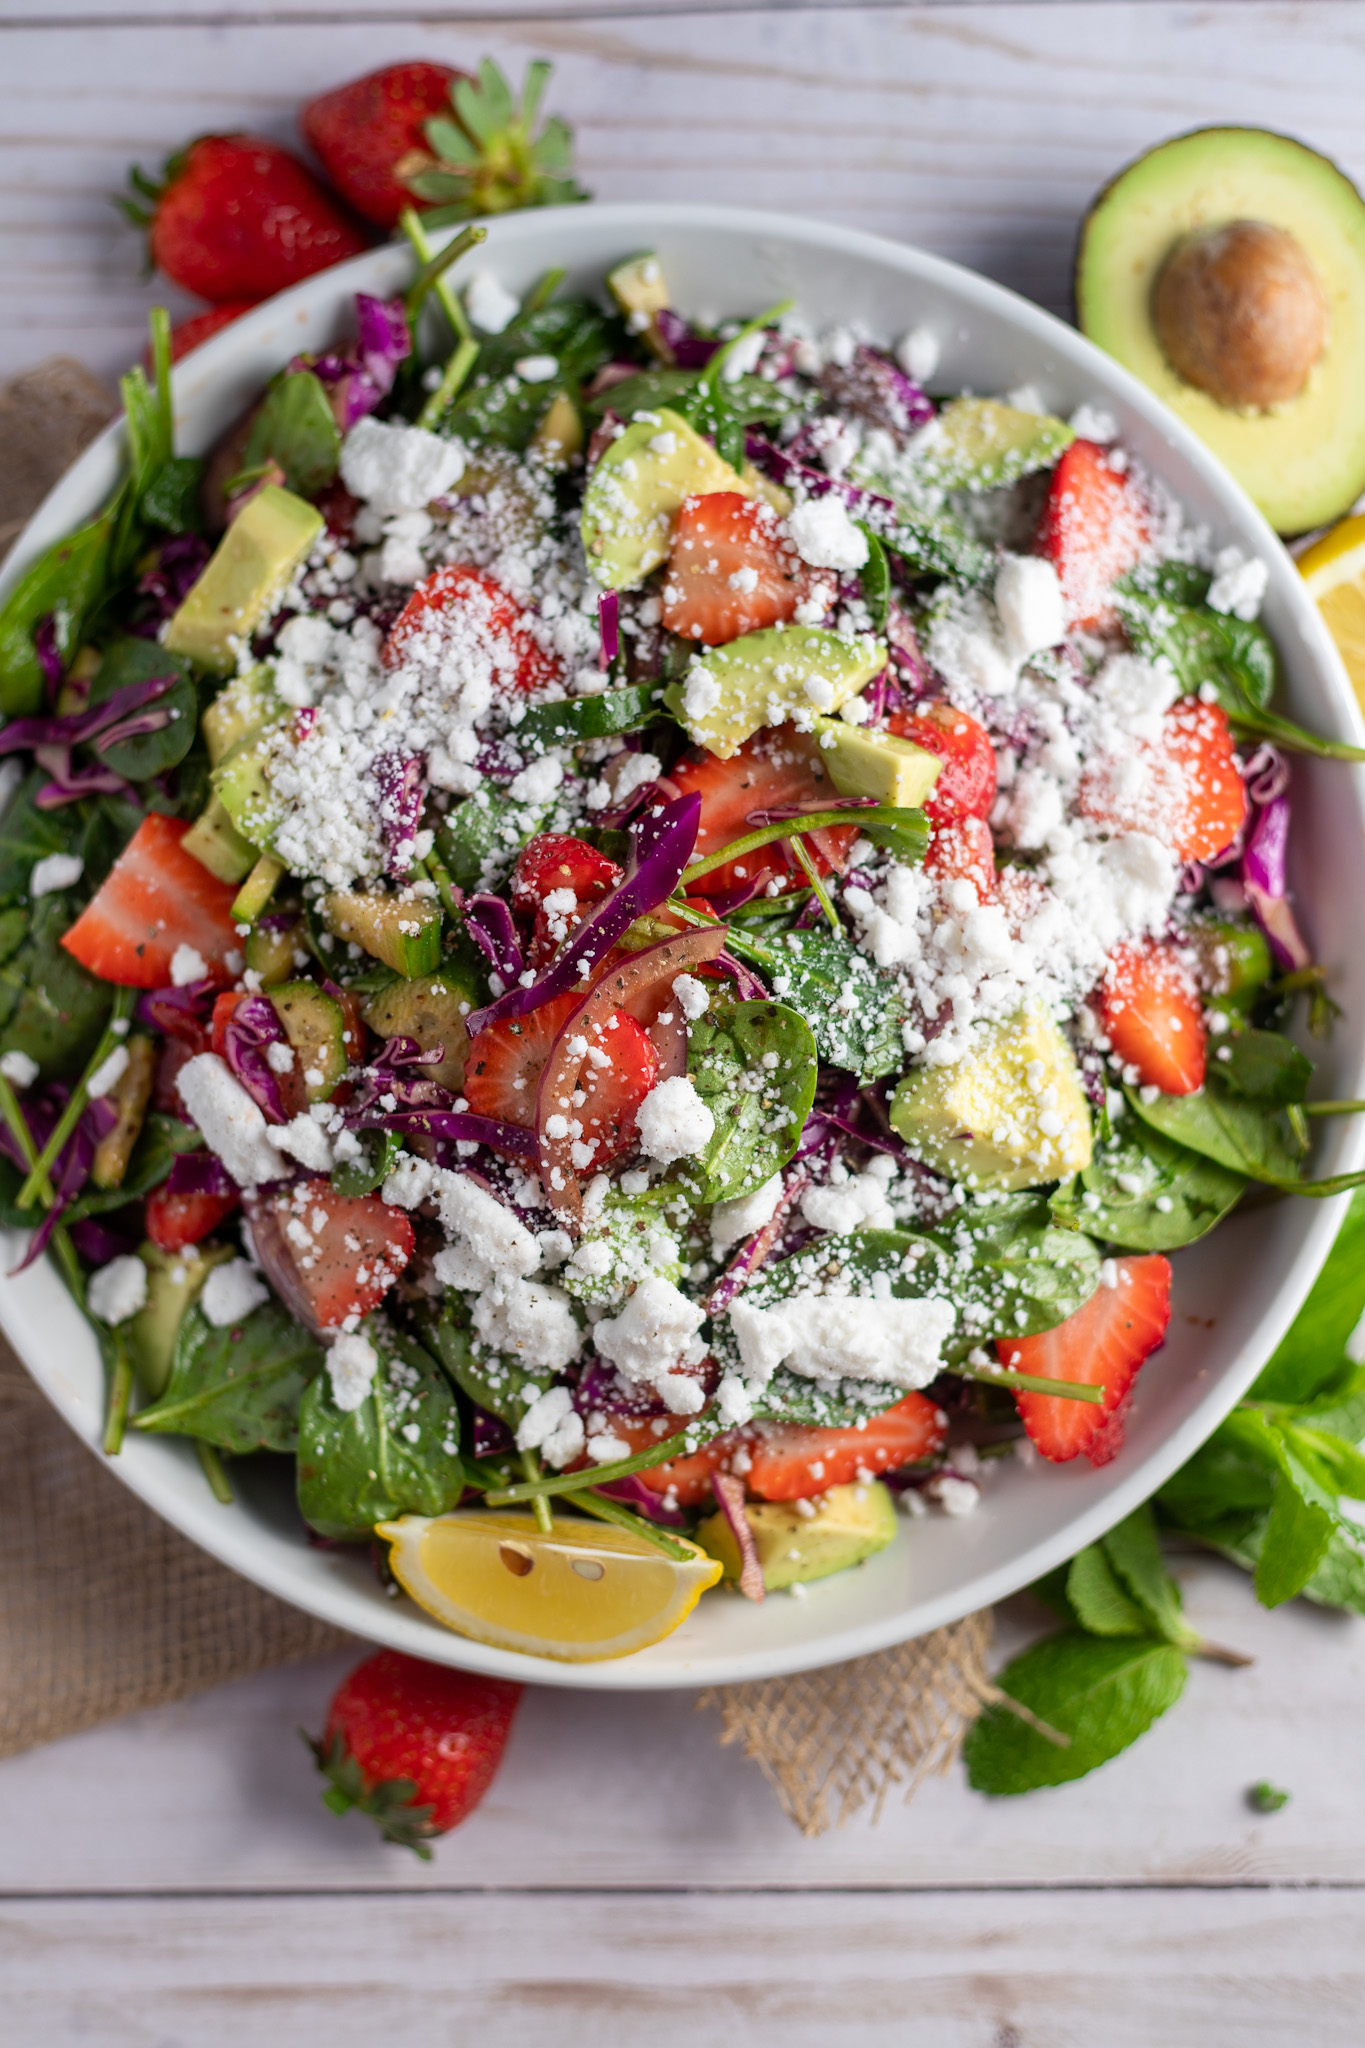 https://betterfoodguru.com/wp-content/uploads/2022/04/Strawberry-and-Vegan-Feta-Salad-with-Balsamic-Dressing-Plant-Based-Salad.jpg